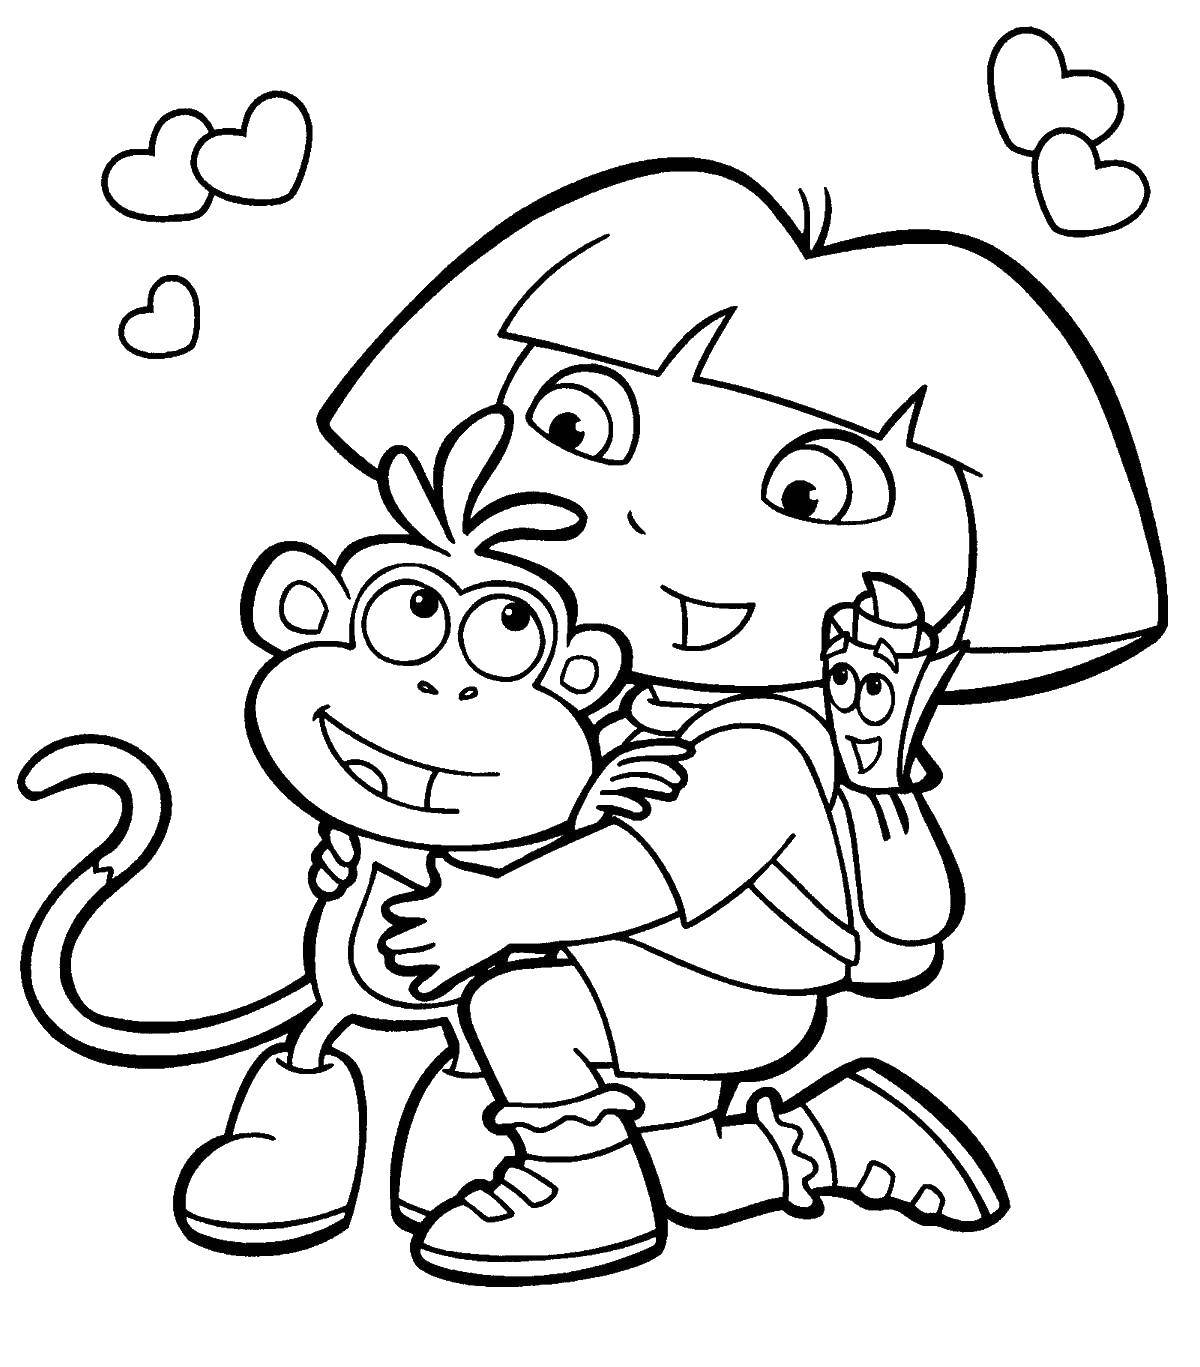 Coloring Dasha and slipper hug. Category Cartoon character. Tags:  Cartoon character, Dora the Explorer, Dora, Boots.